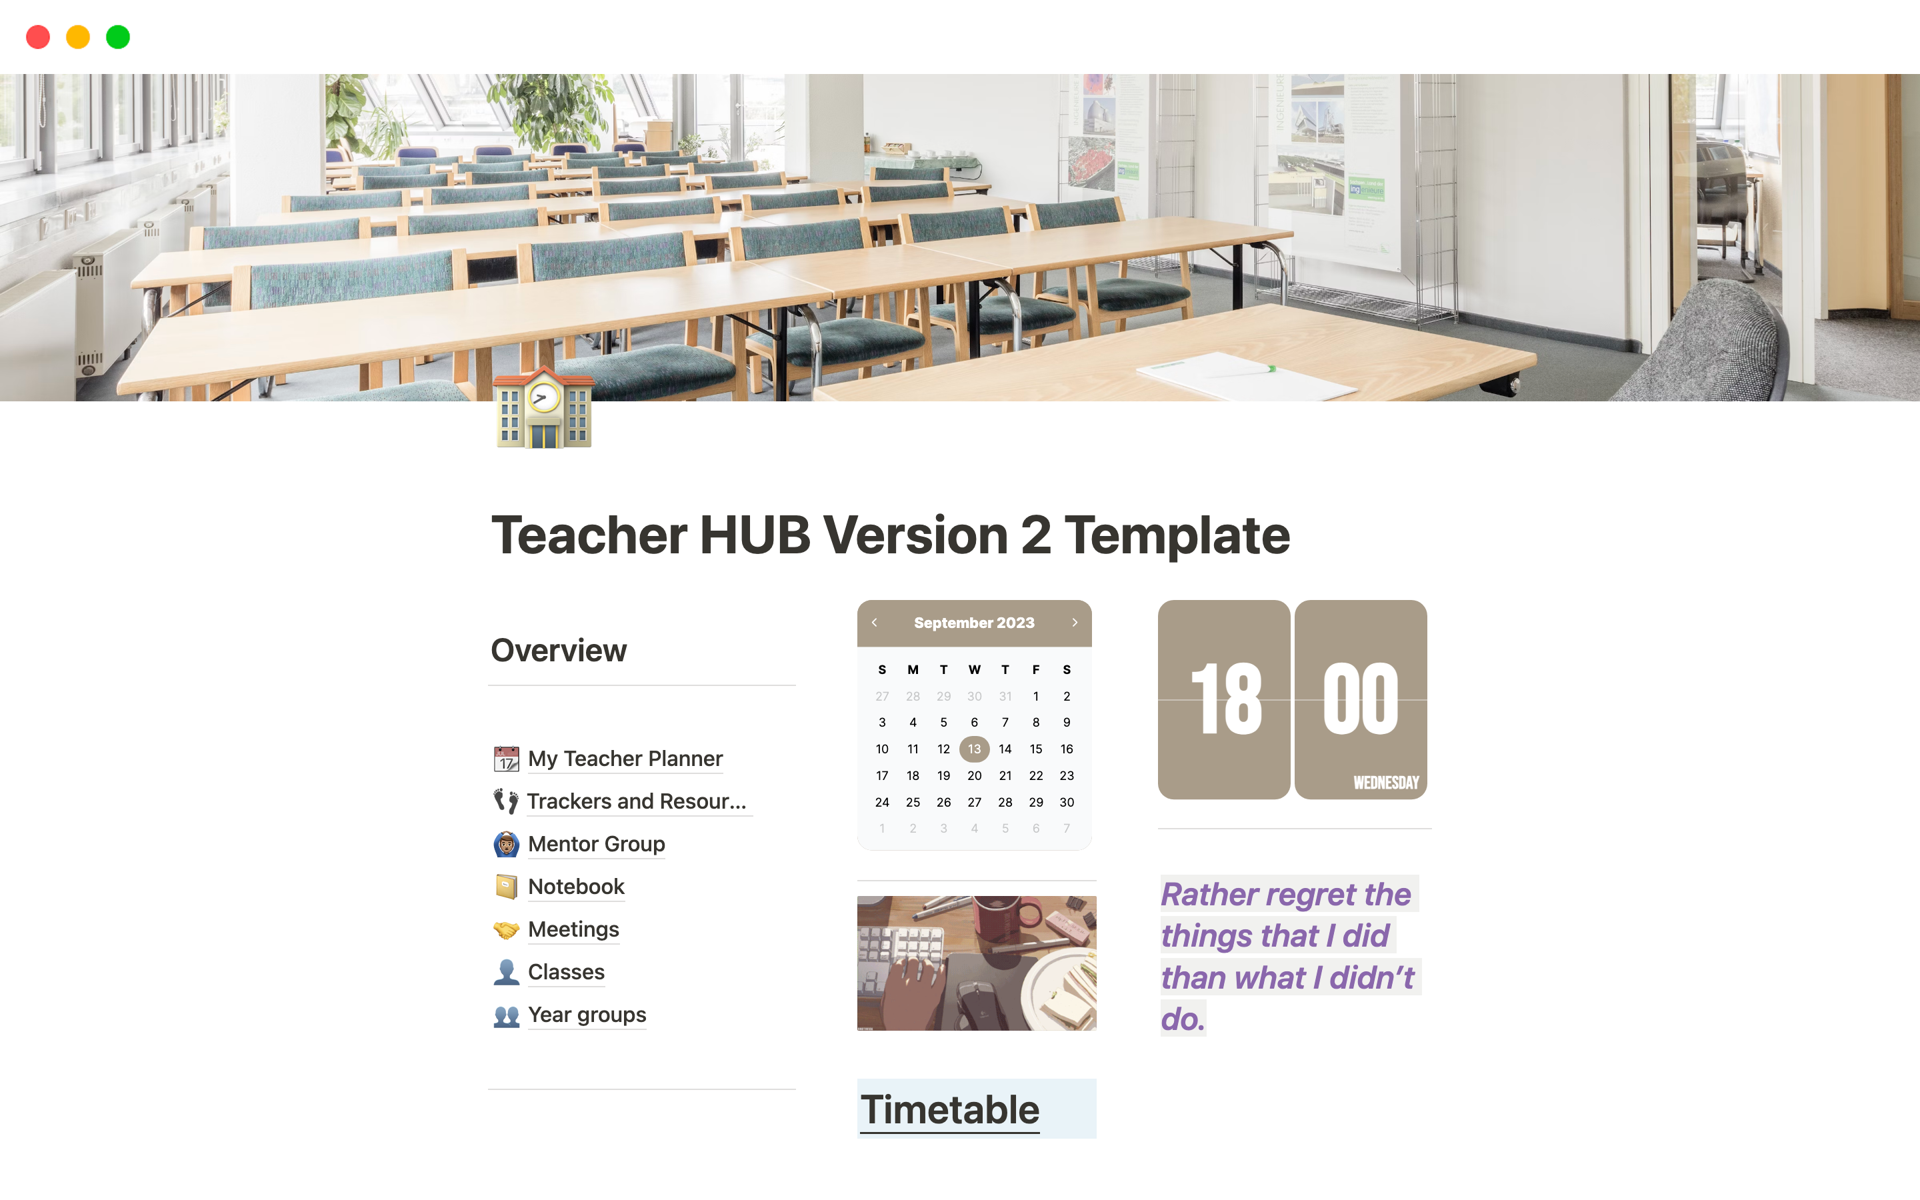 Aperçu du modèle de Teacher HUB Version 2